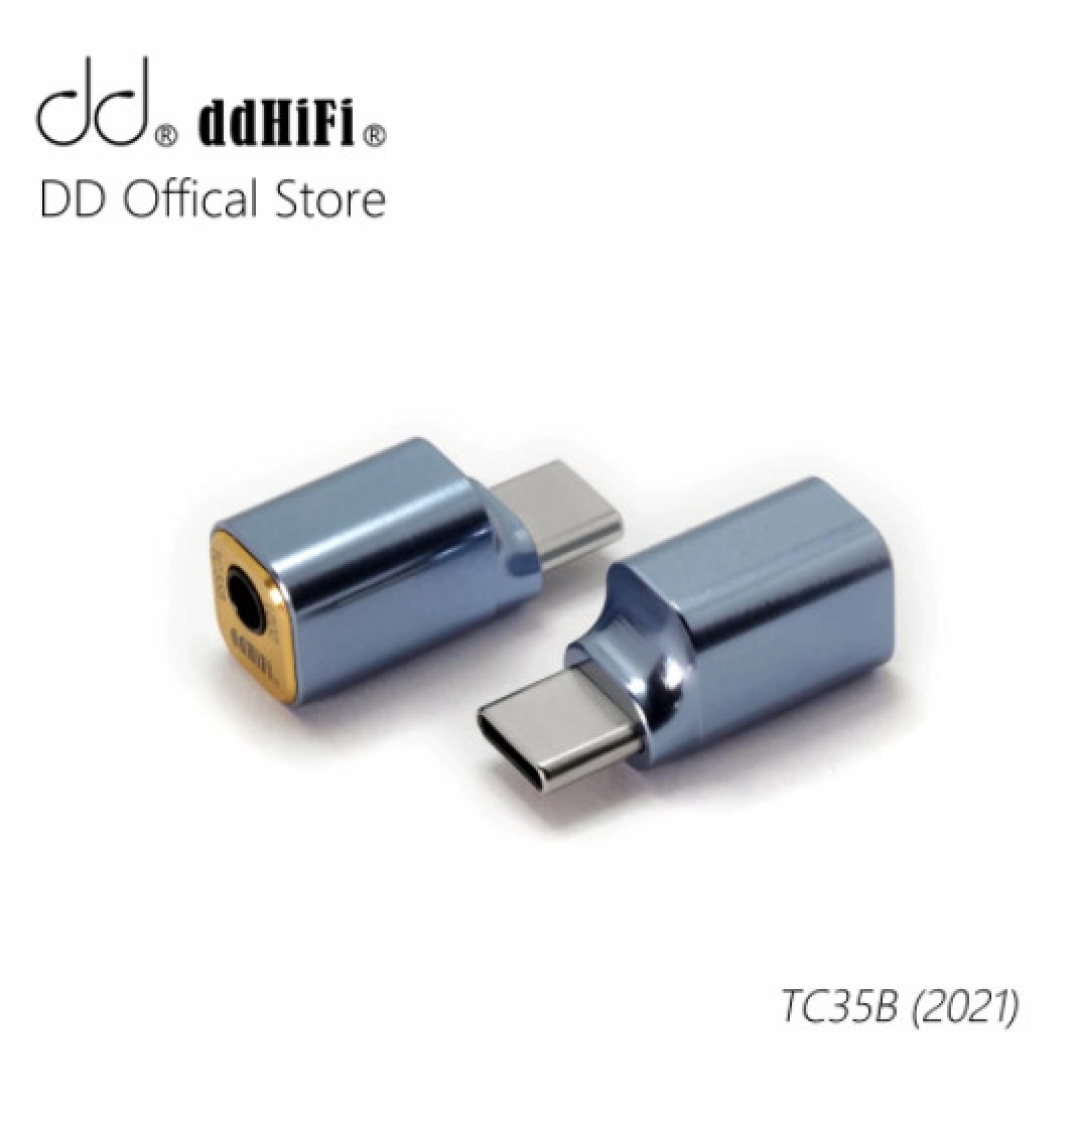 USB C ra 3.5 Adapter ddHiFi TC35B (2021)